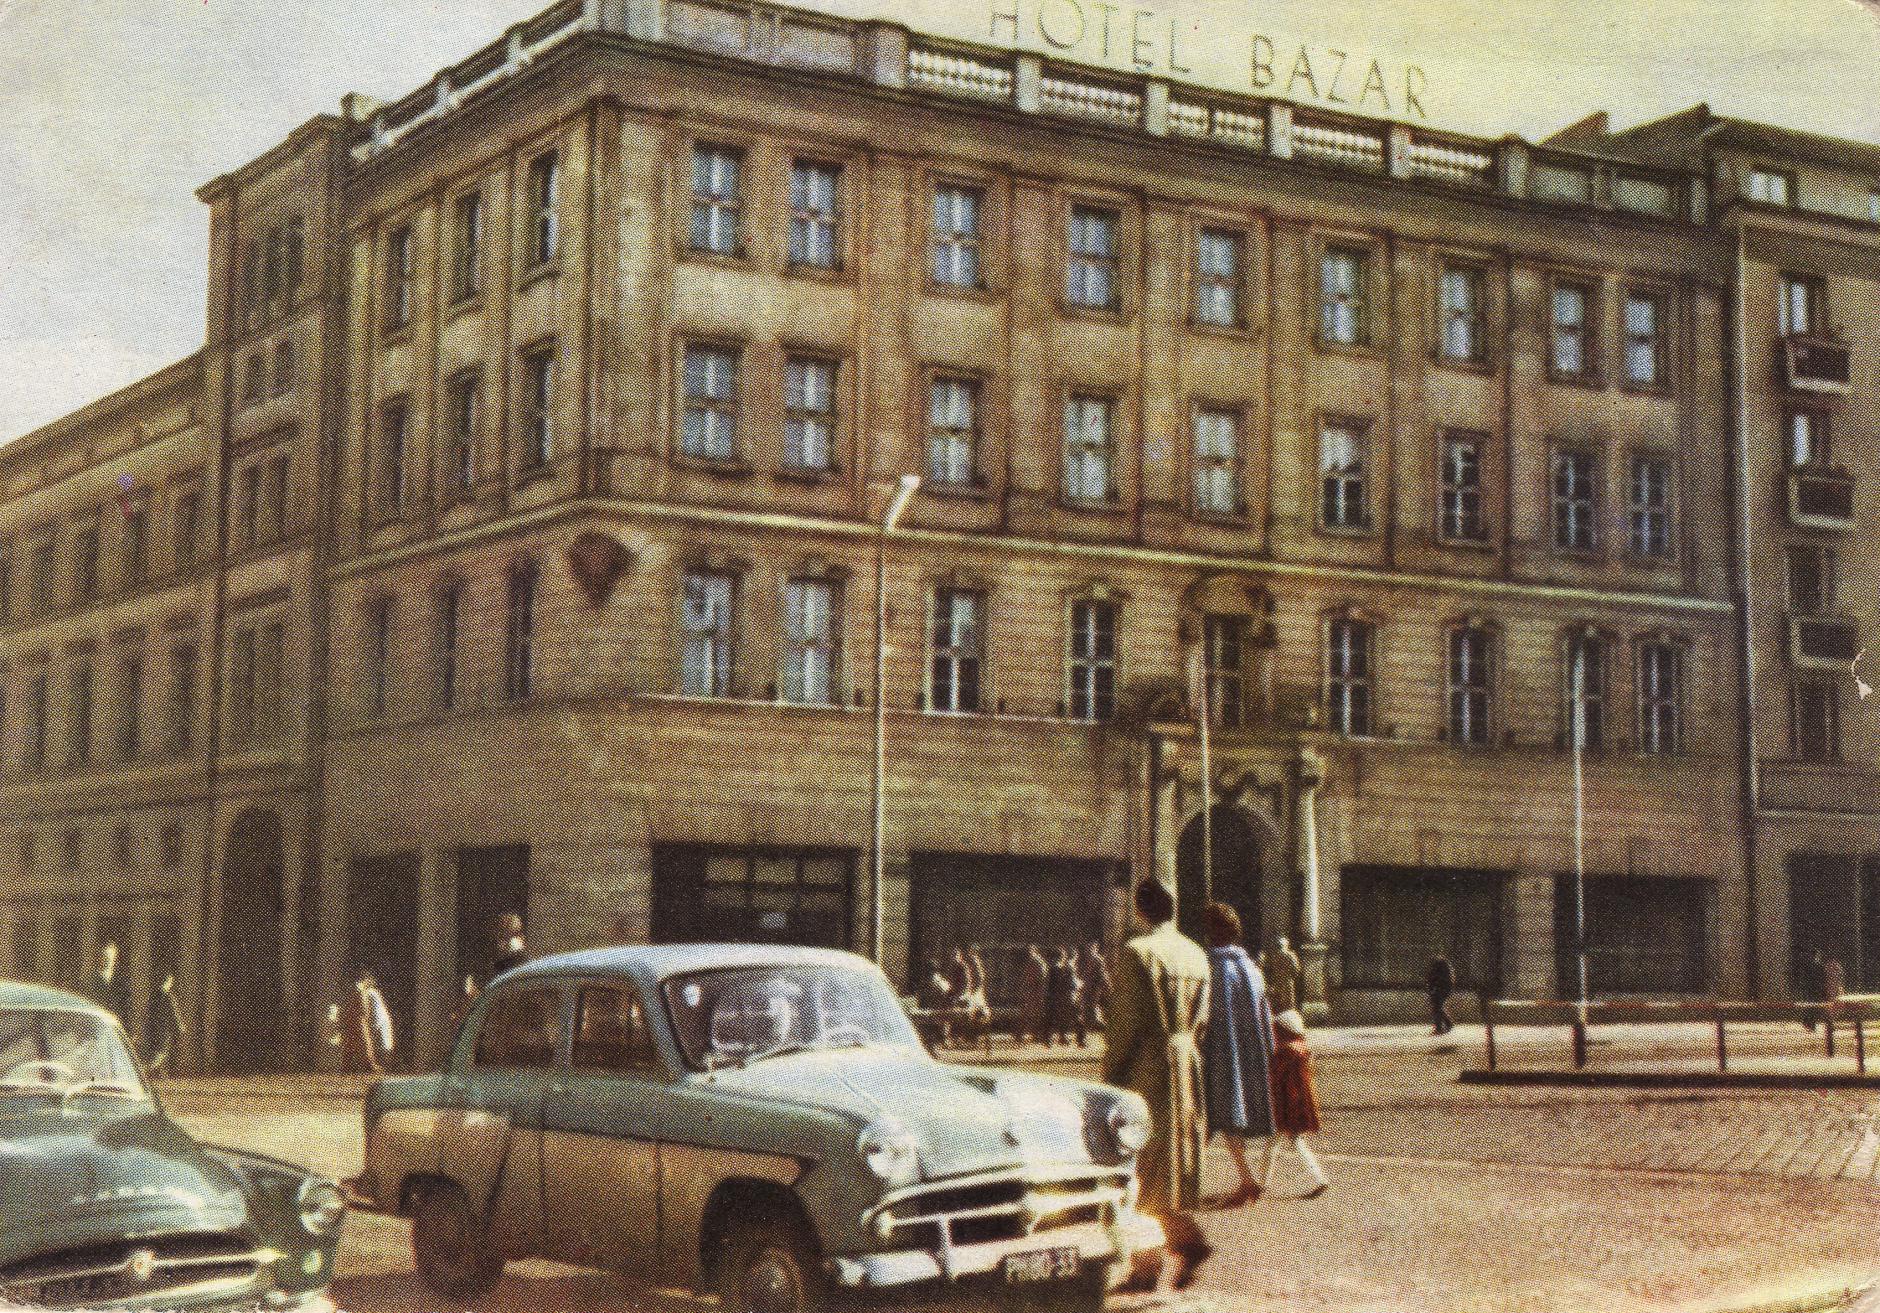 (1965) Hotel Bazar.